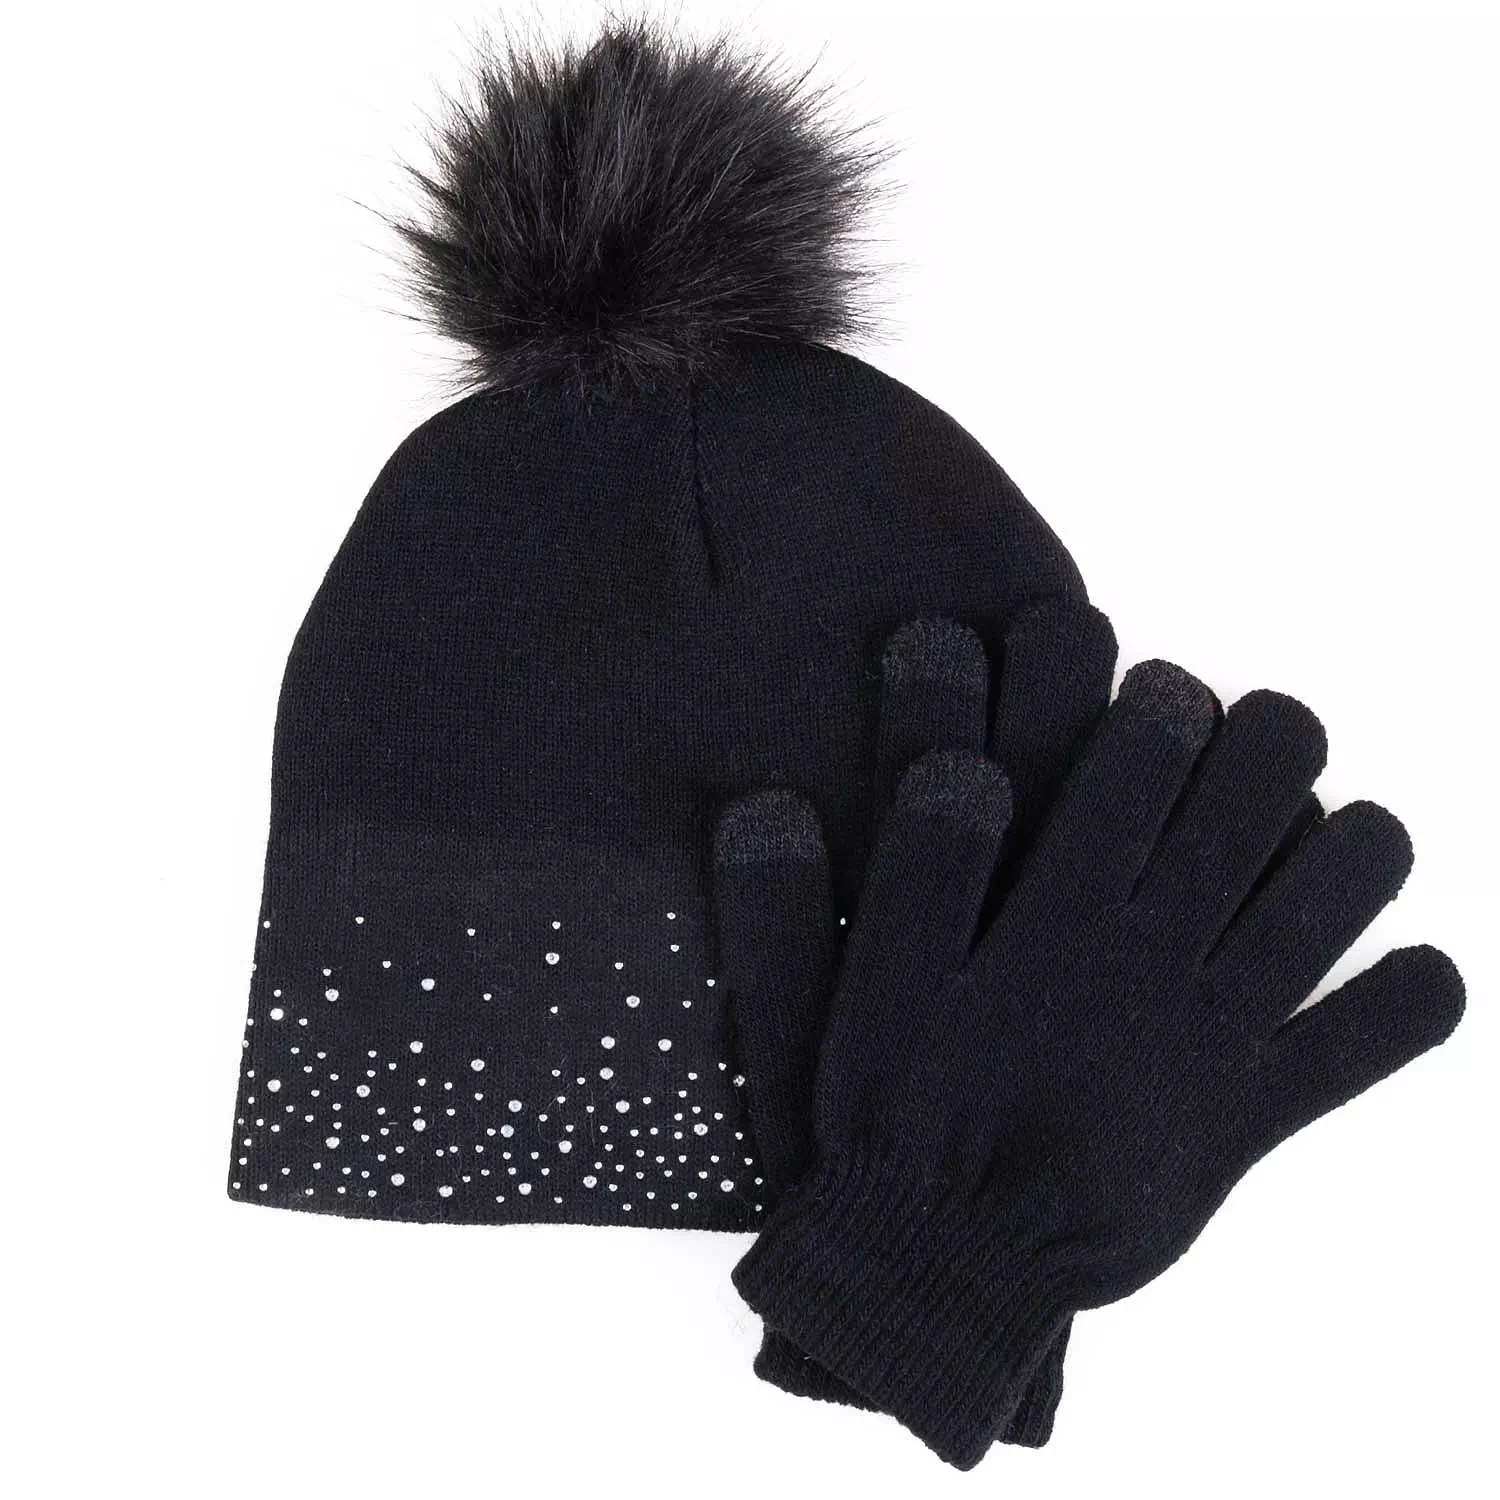 Rhinestone detail hat & glove set, black